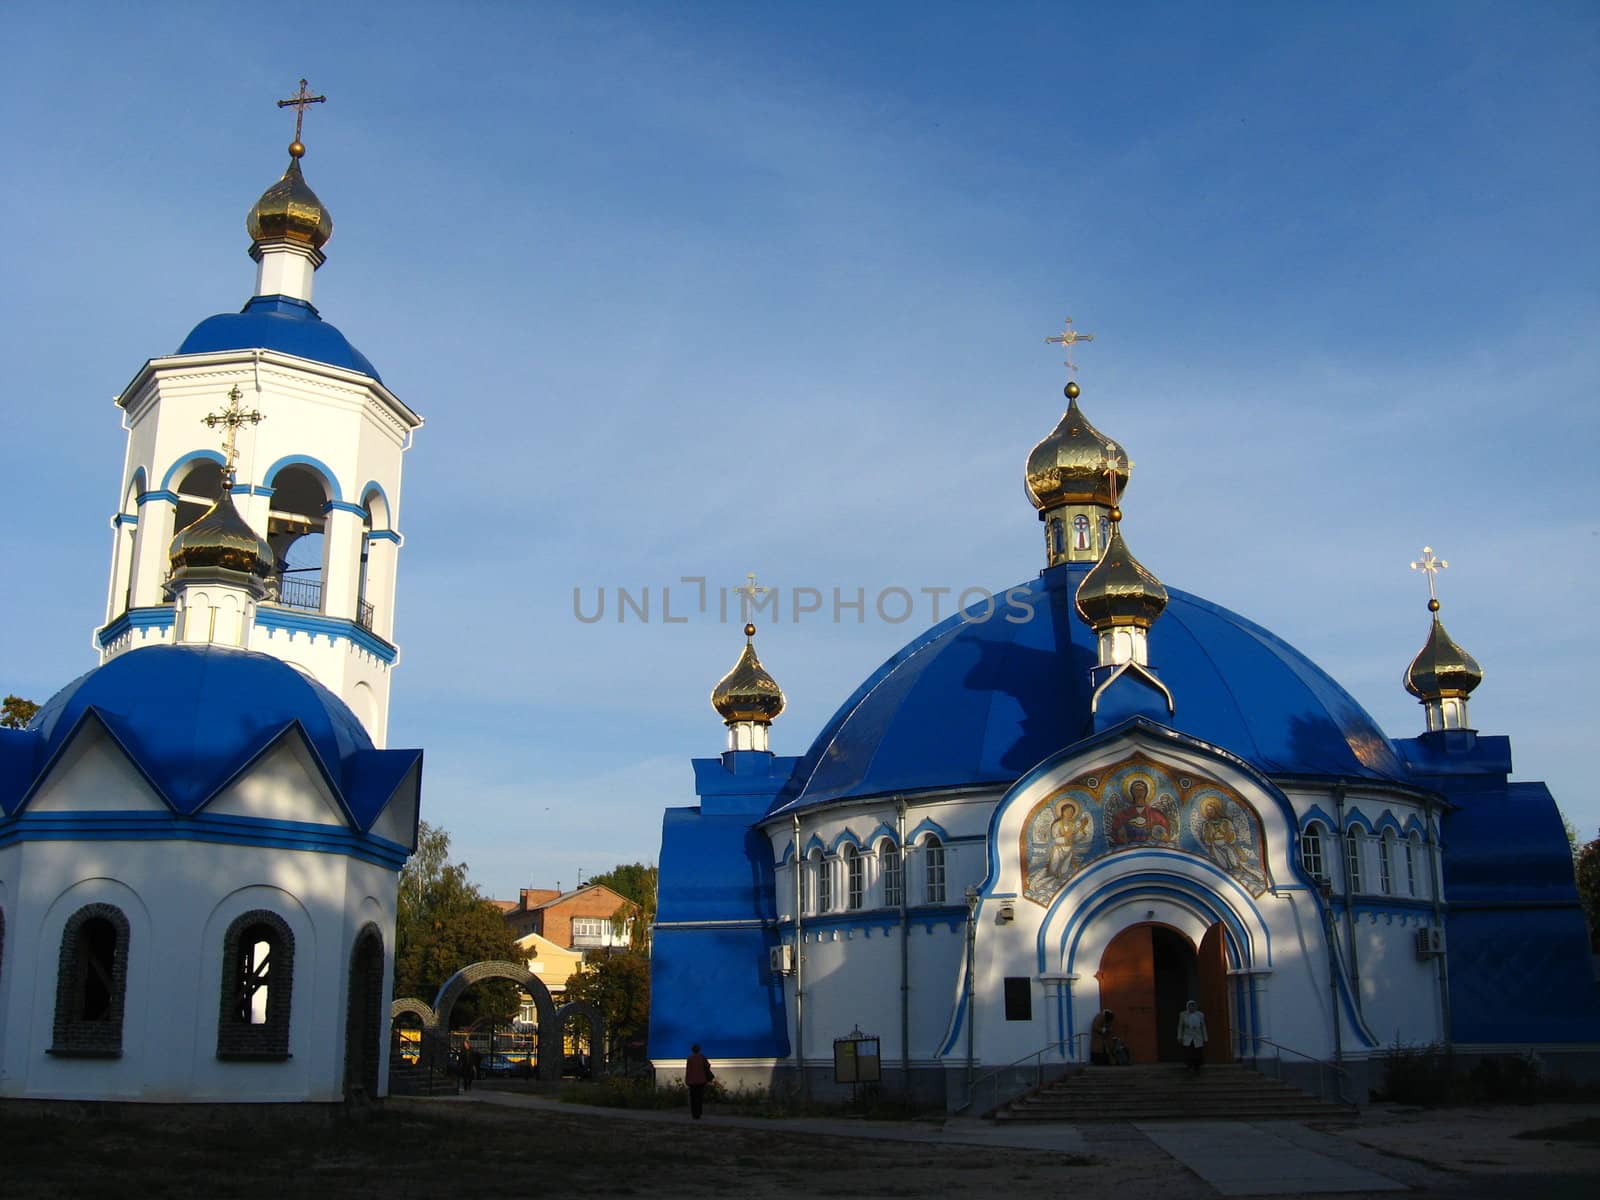 a beautiful small Christian monastery with nice church